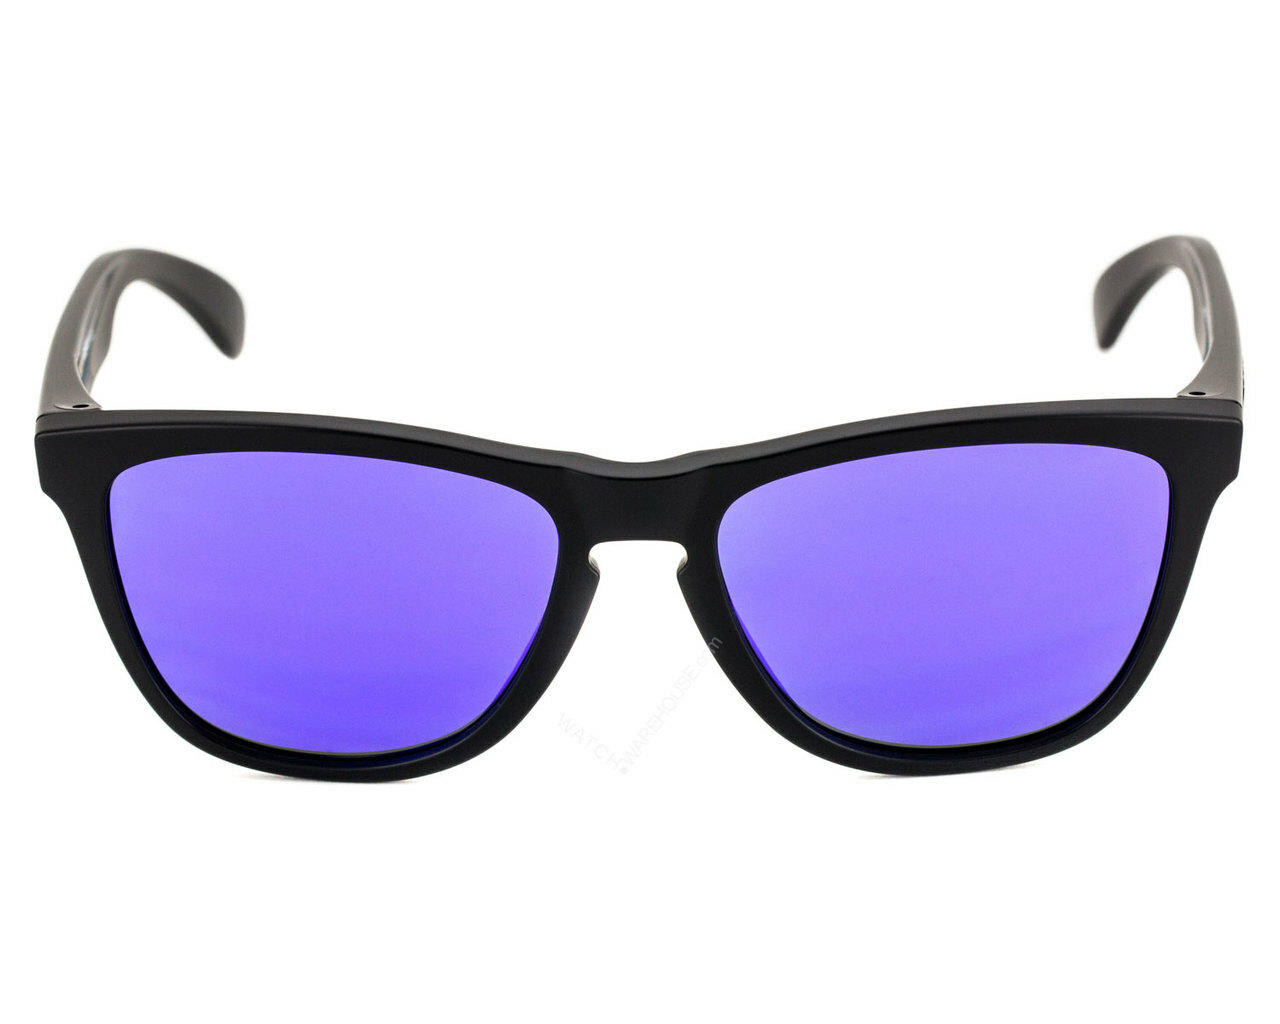 Oakley Frogskins Matte BLK Frame Violet Iridium Lens Sunglasses 24-298 |  Fast & Free US Shipping | Watch Warehouse